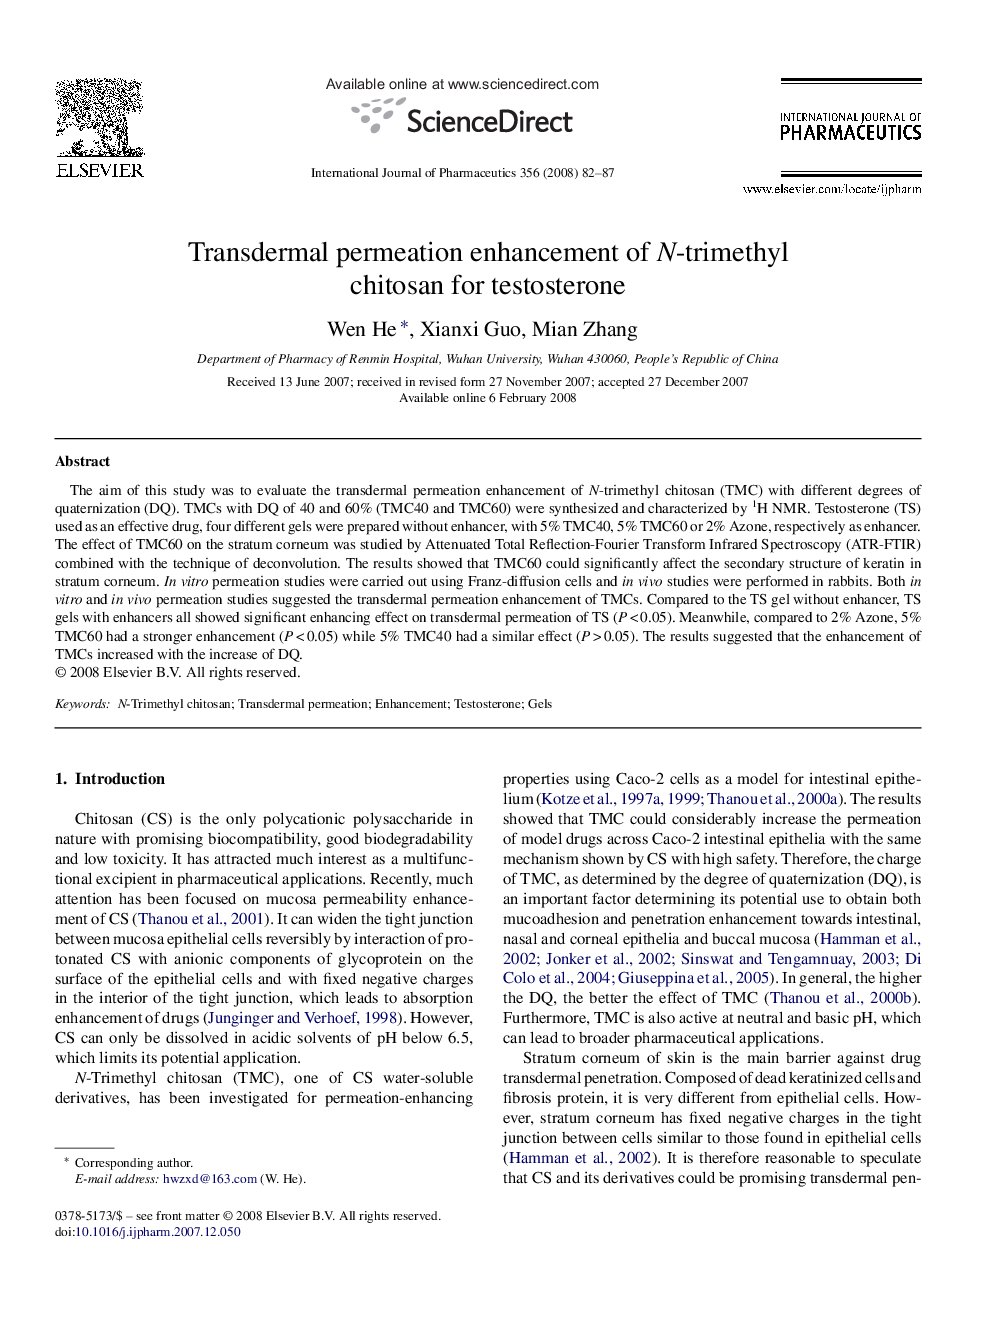 Transdermal permeation enhancement of N-trimethyl chitosan for testosterone